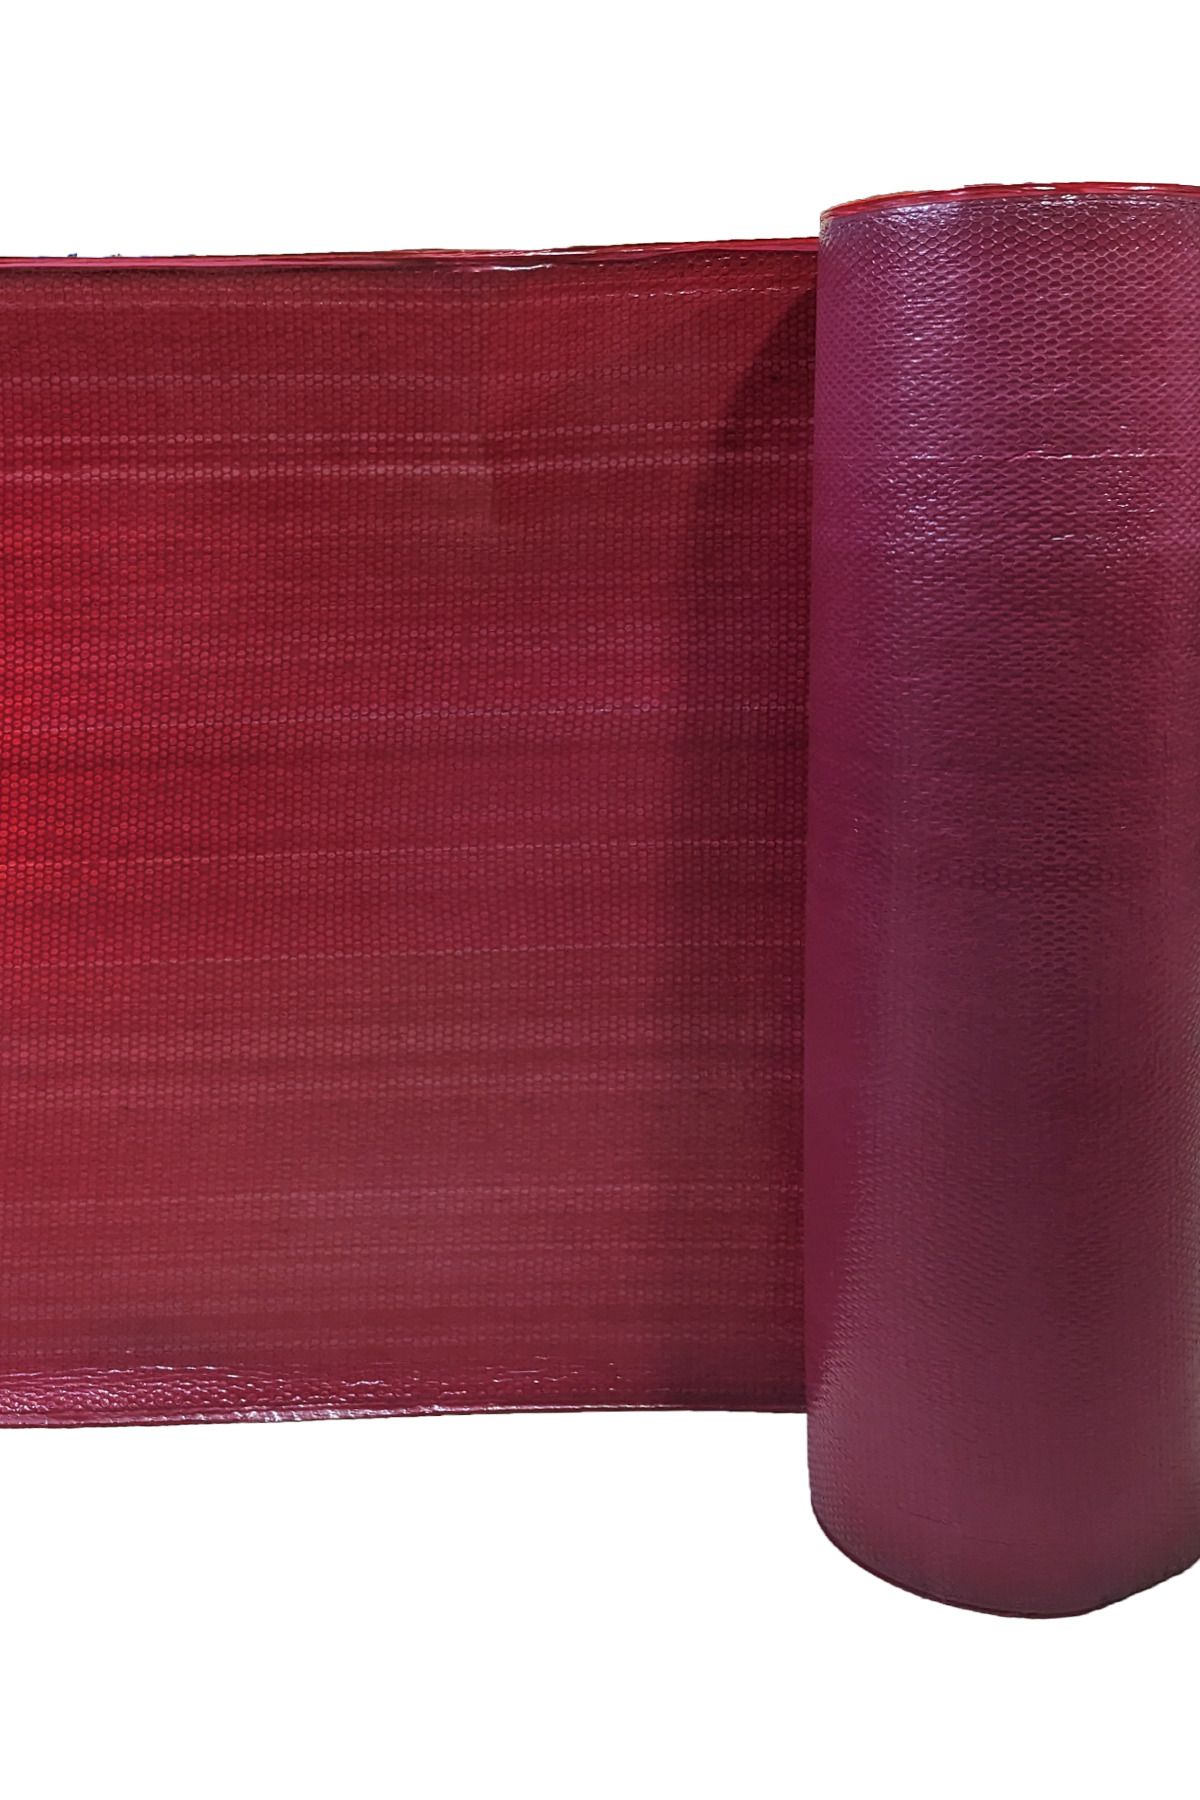 Aydınlar Ambalaj 100cmx5m 290gr Kalın Kırmızı Ambalaj Poşeti Balonlu Havalı Naylon Patpat Pıtpıt Taşınma Poşeti